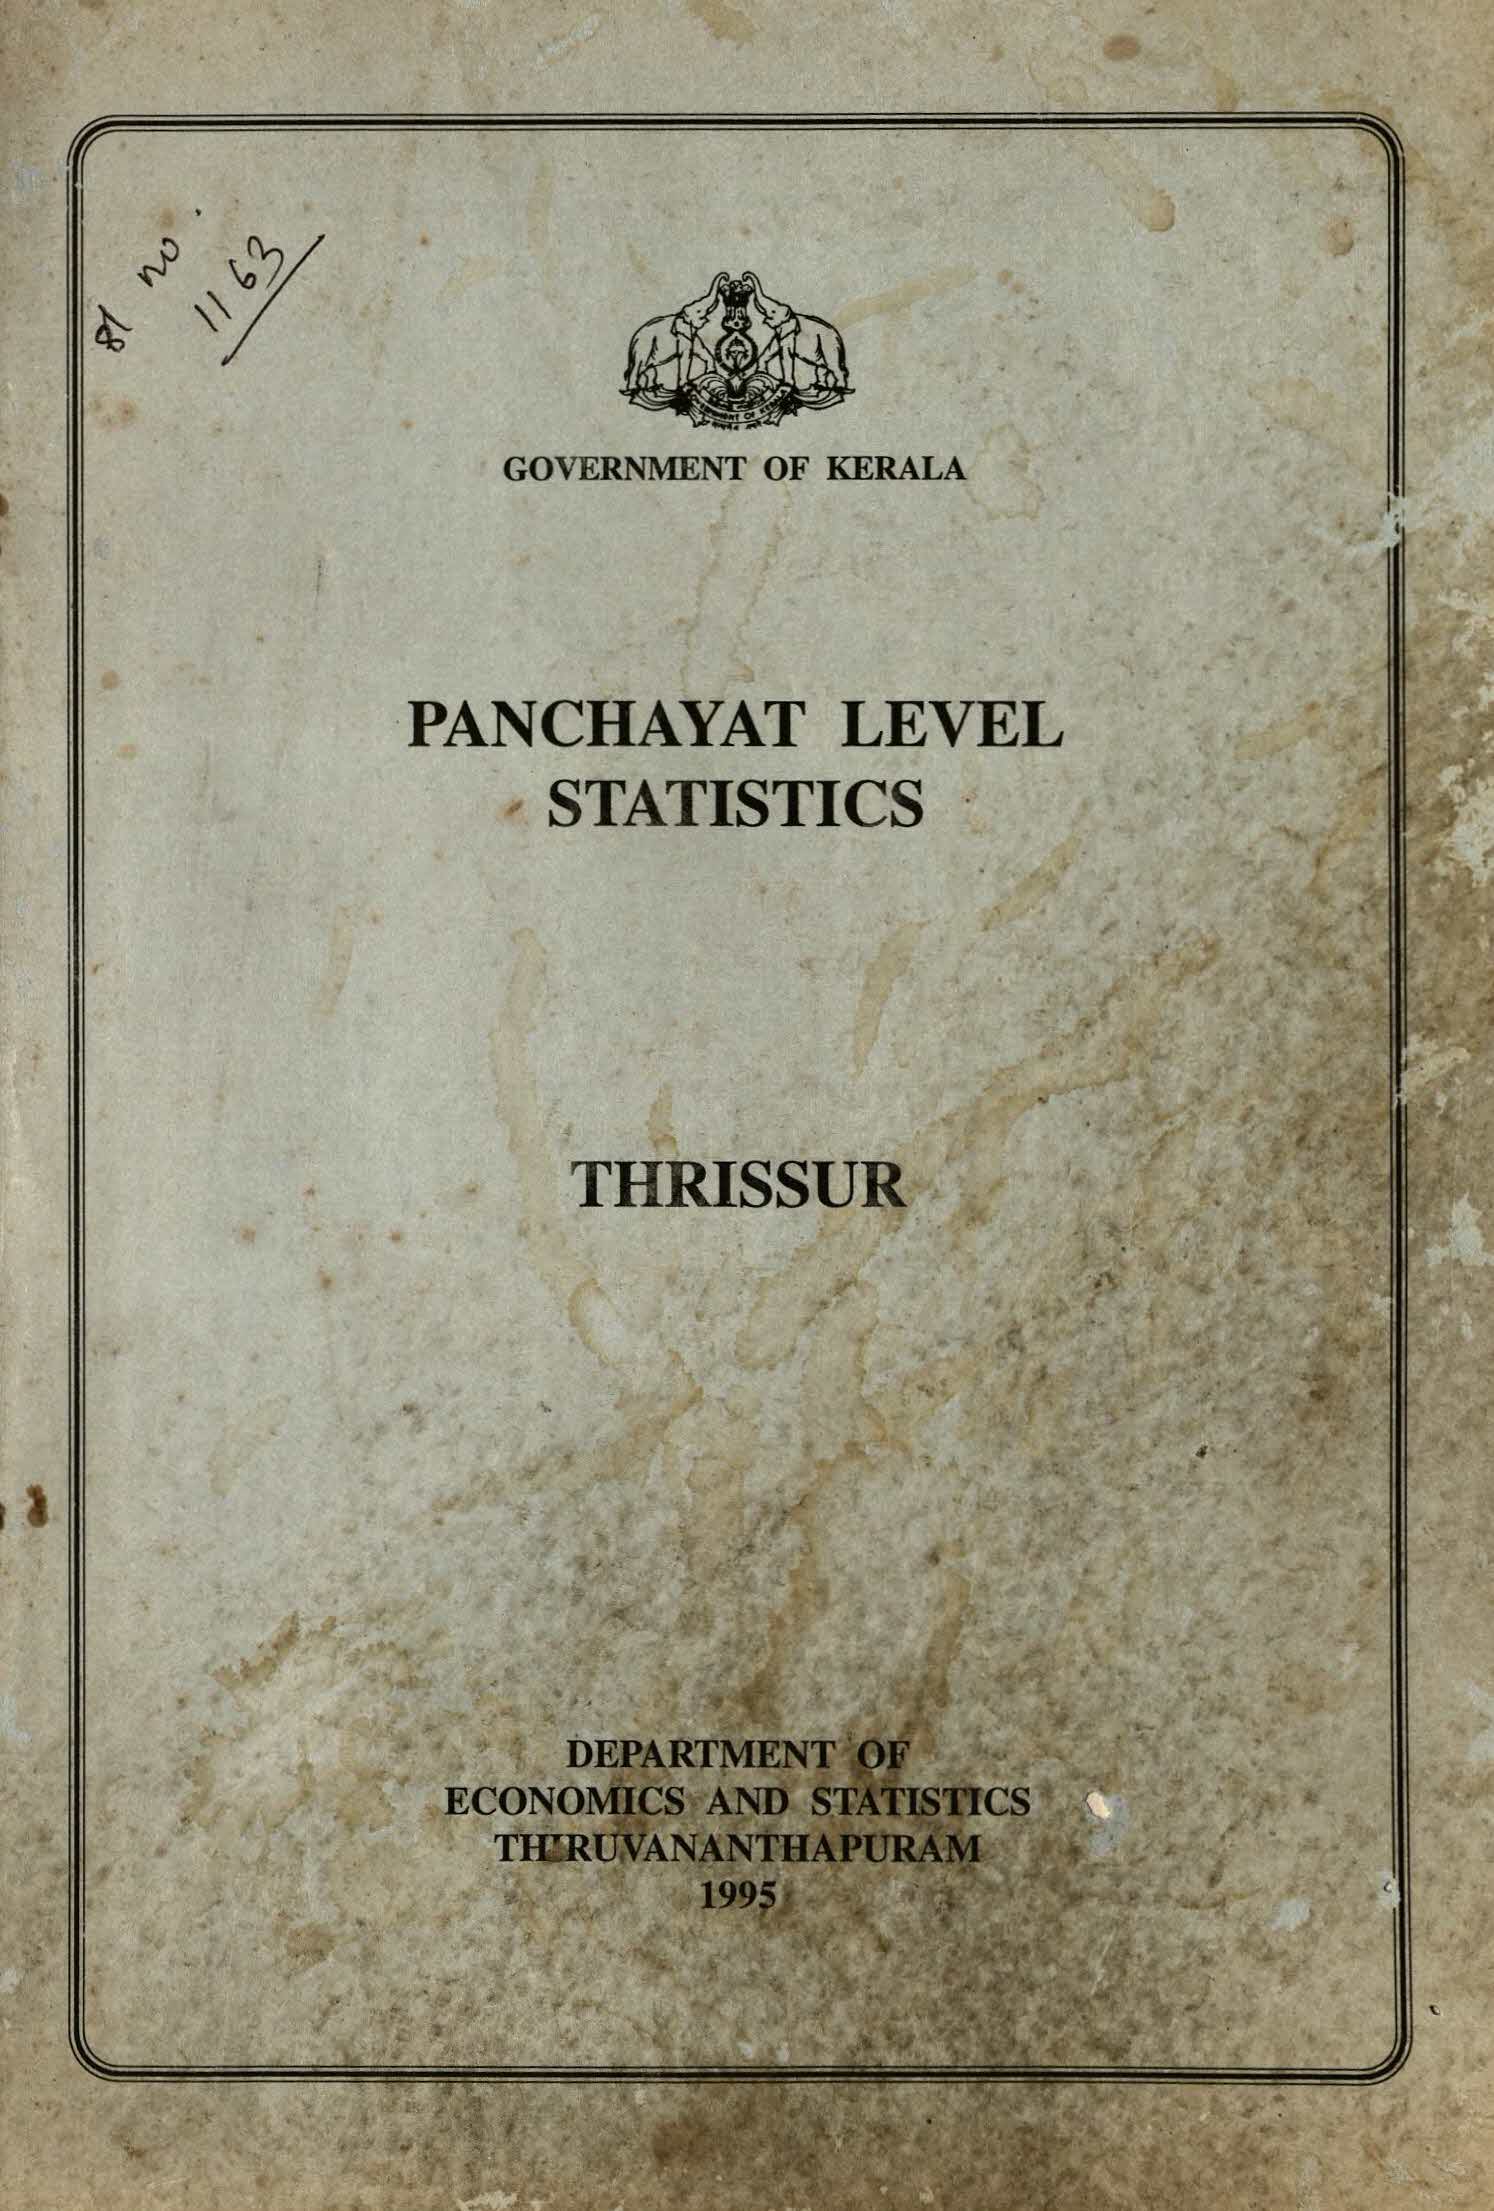 PANCHAYAT LEVEL BUILDING STATISTICS THRISSUR 1995